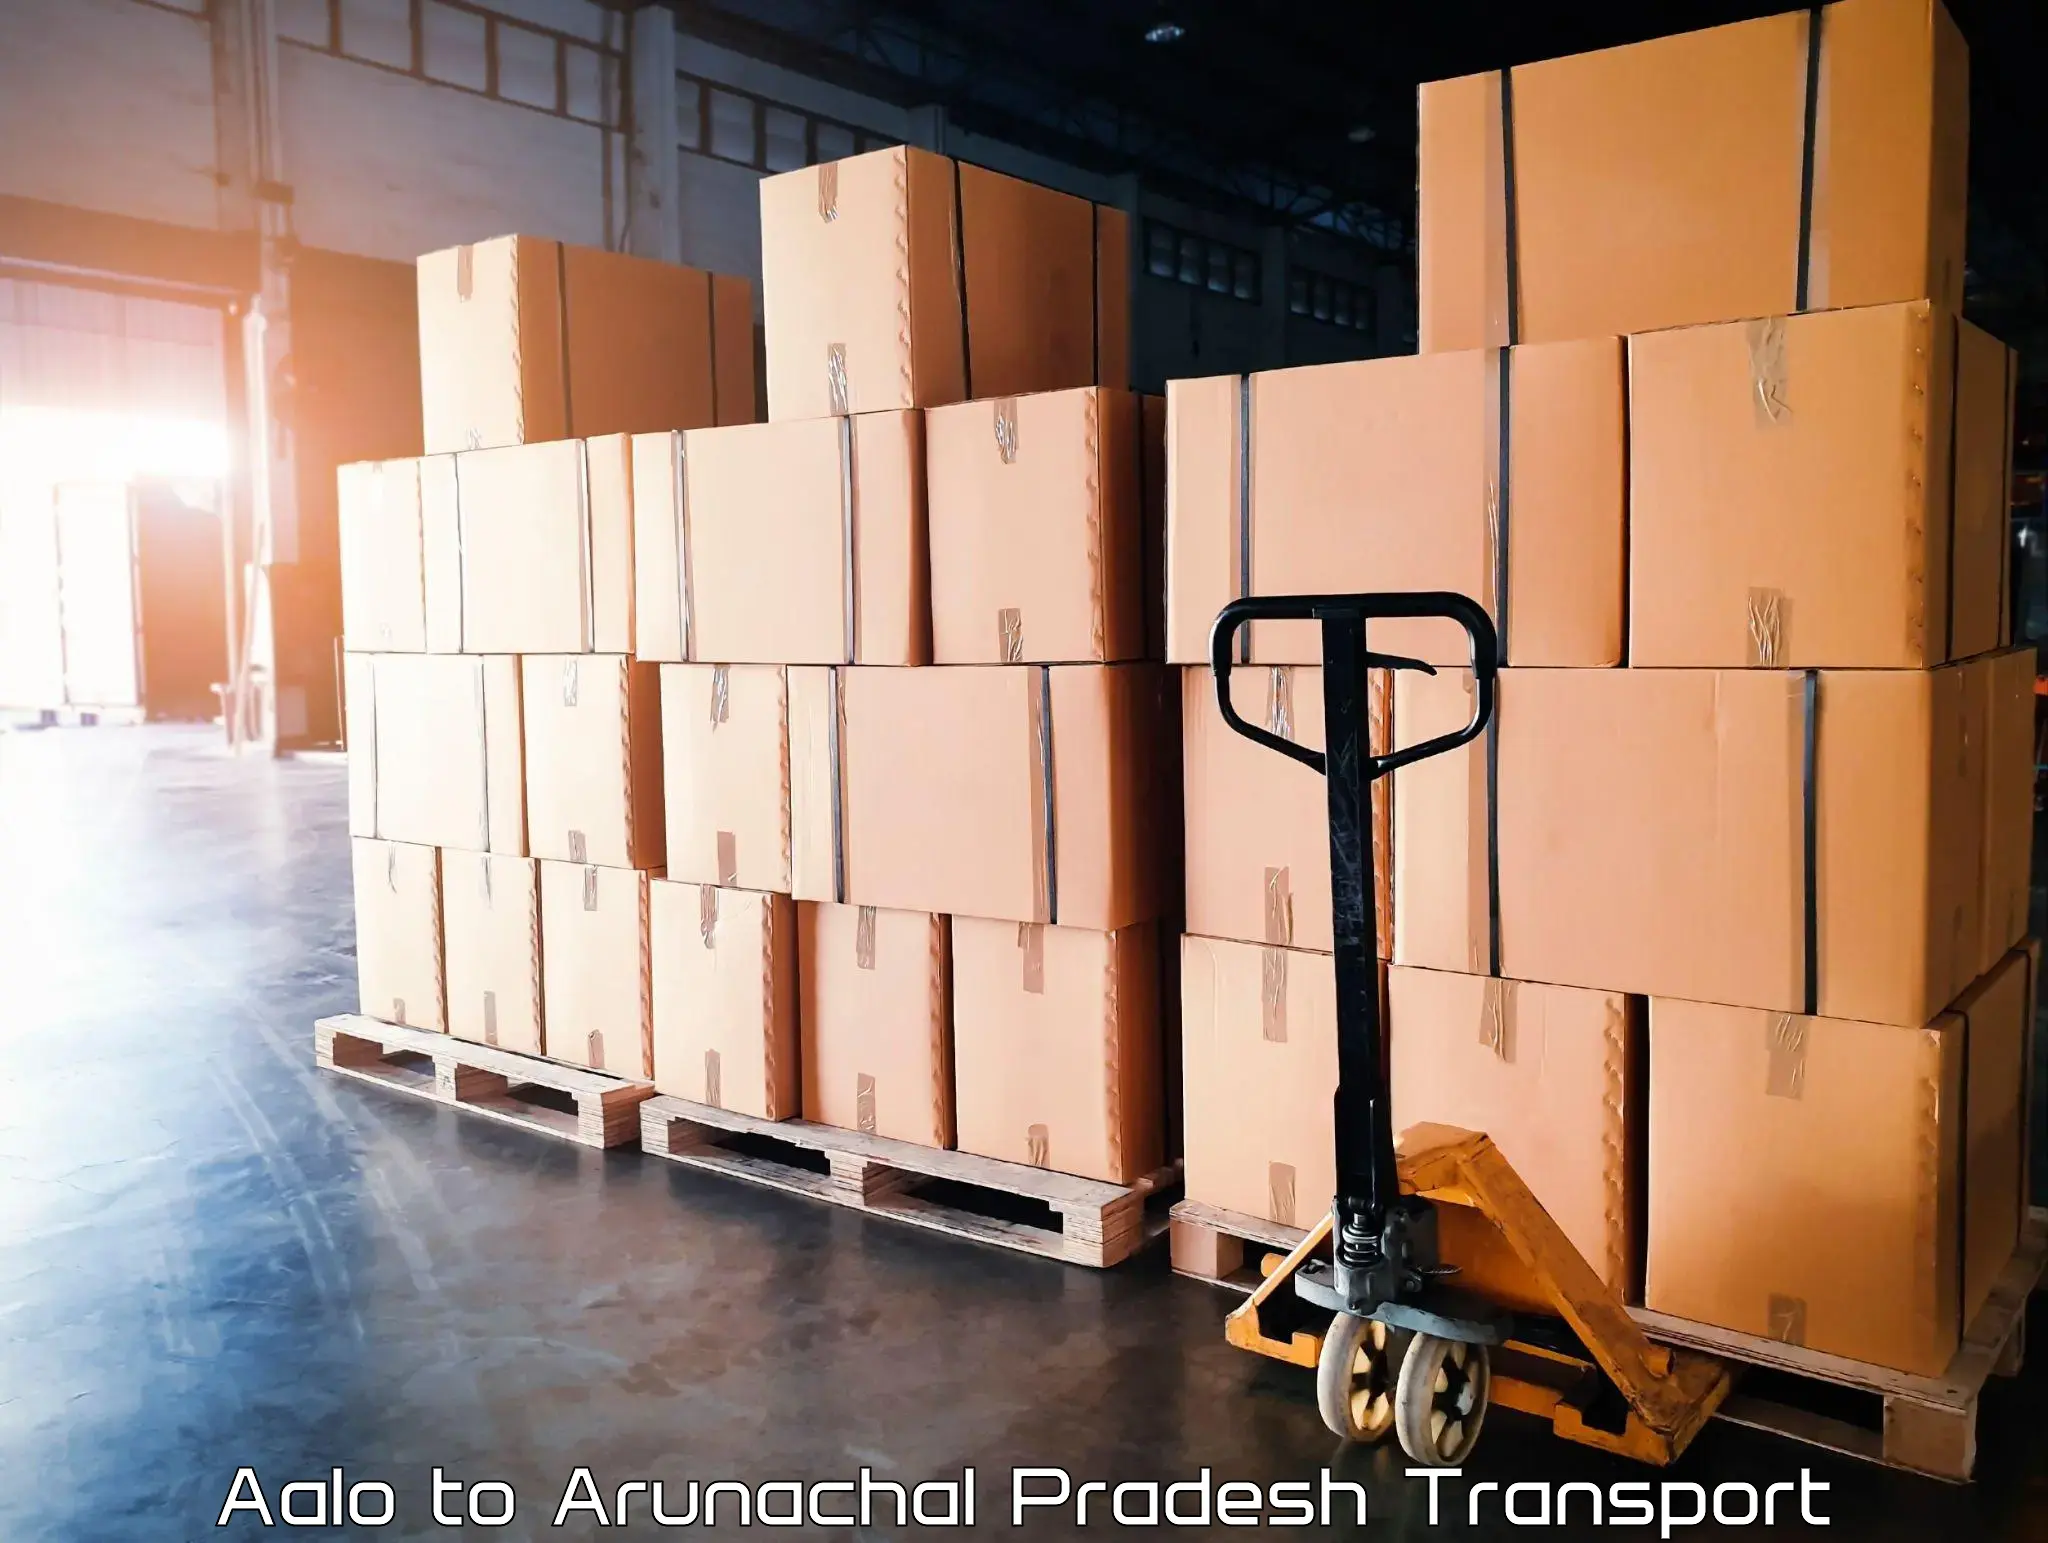 Delivery service in Aalo to Arunachal Pradesh